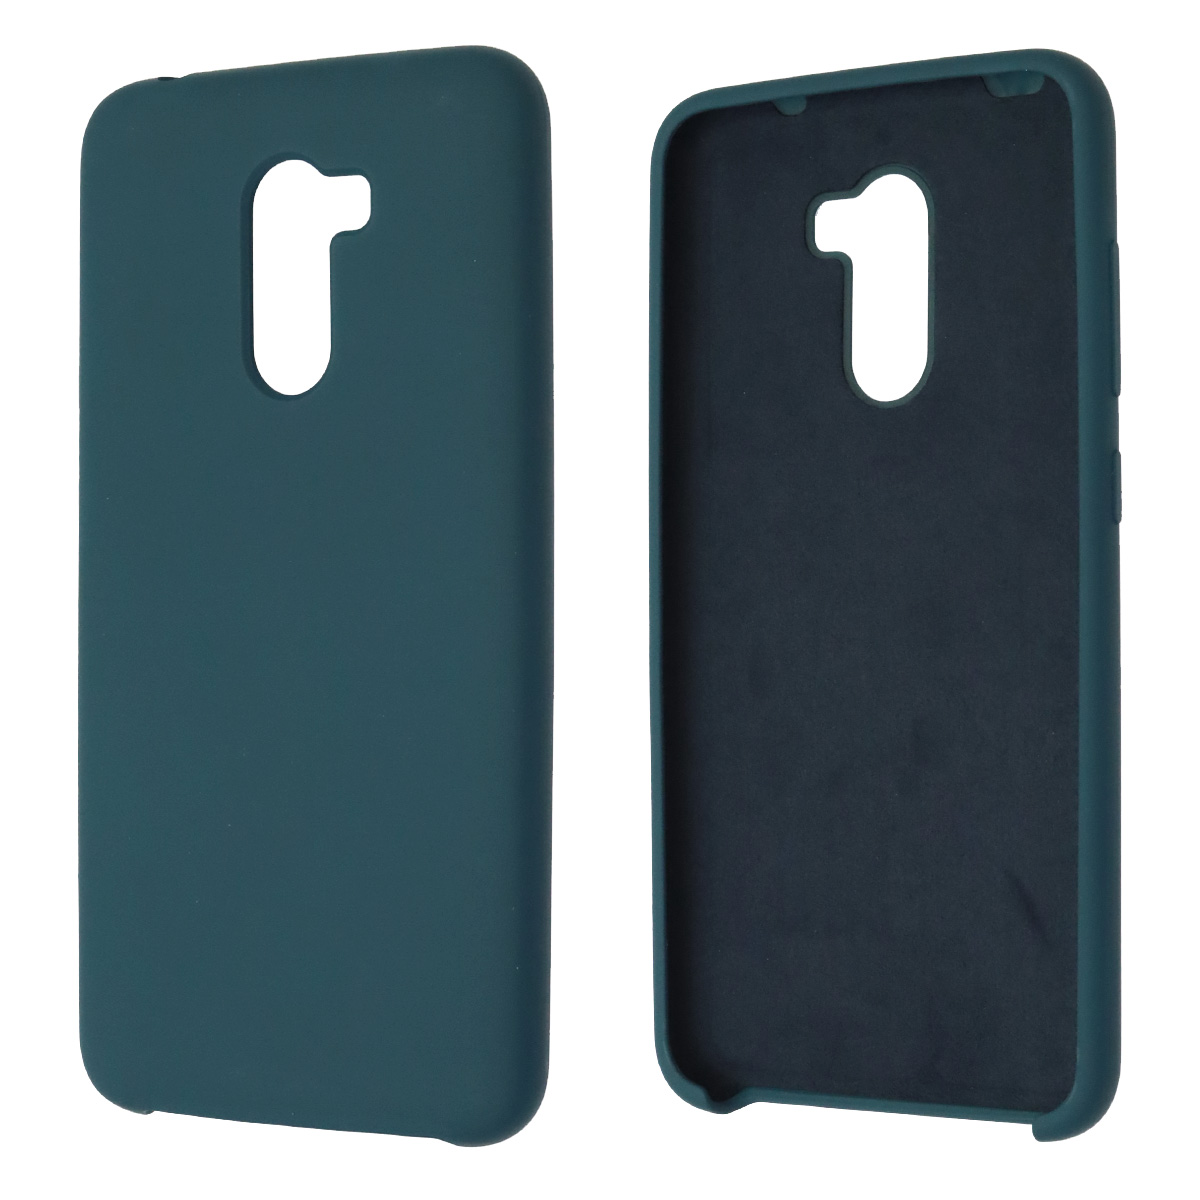 Чехол накладка Silicon Cover для XIAOMI Pocophone F1, силикон, бархат, цвет синий